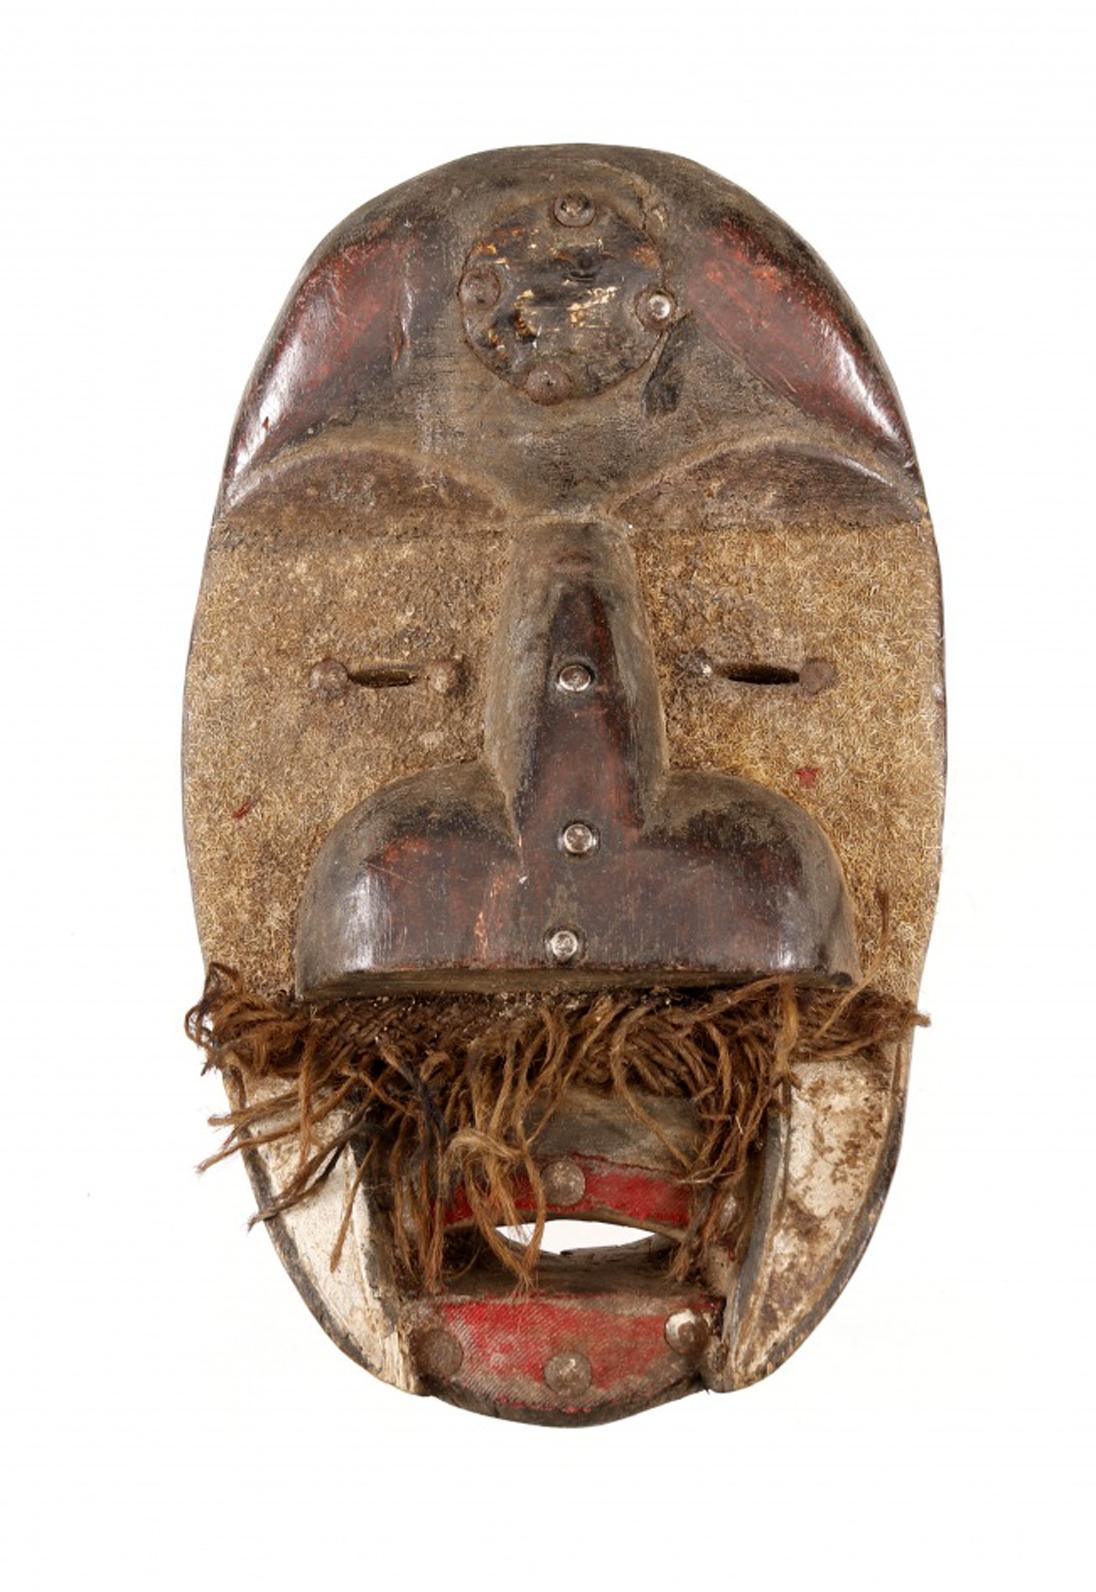 Unknown Figurative Sculpture - "Dan Guéré" African Tribal Art Mask Sculpture from Ivory Coast, 20th Century